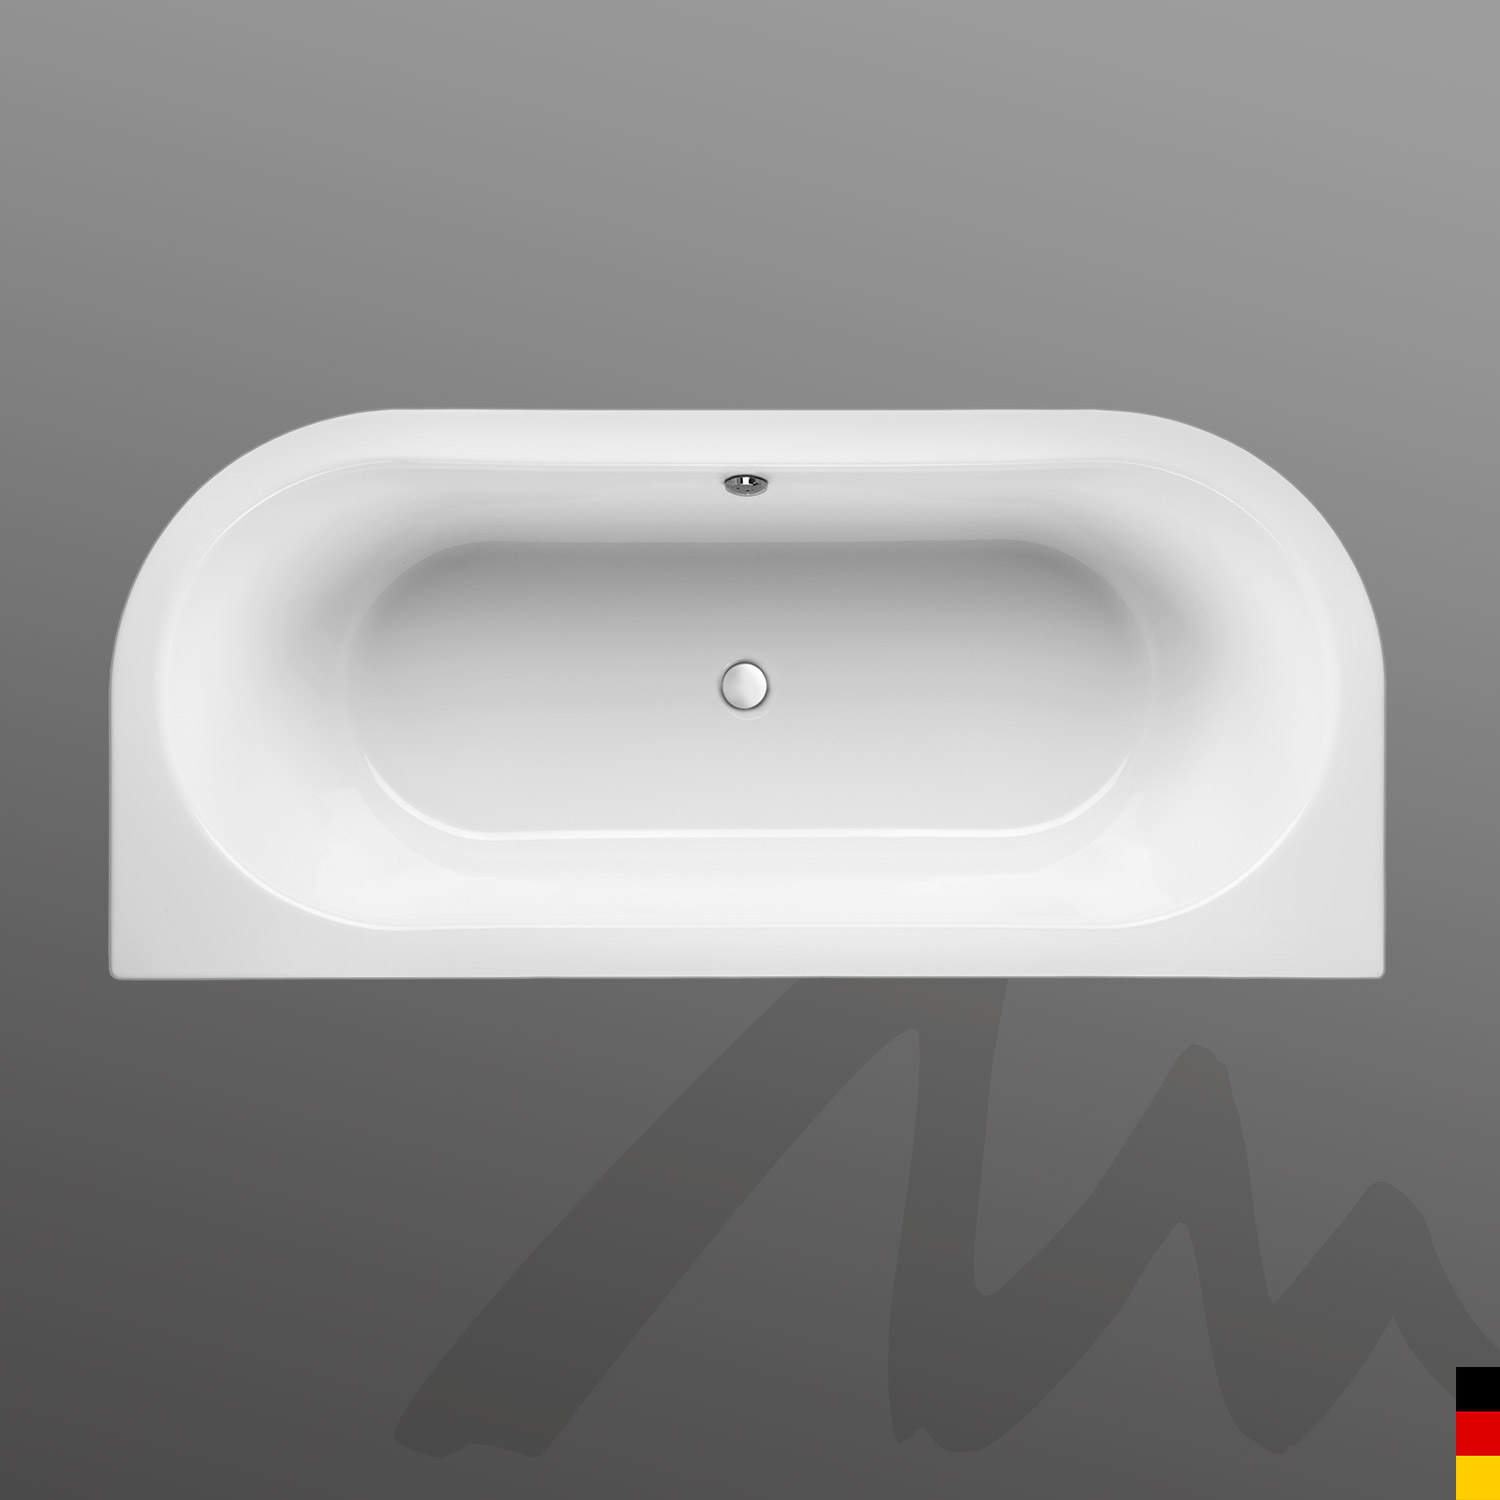 Mauersberger Badewanne Oval Primo 2 - 180/80 duo  180x80x45  Farbe: weiß